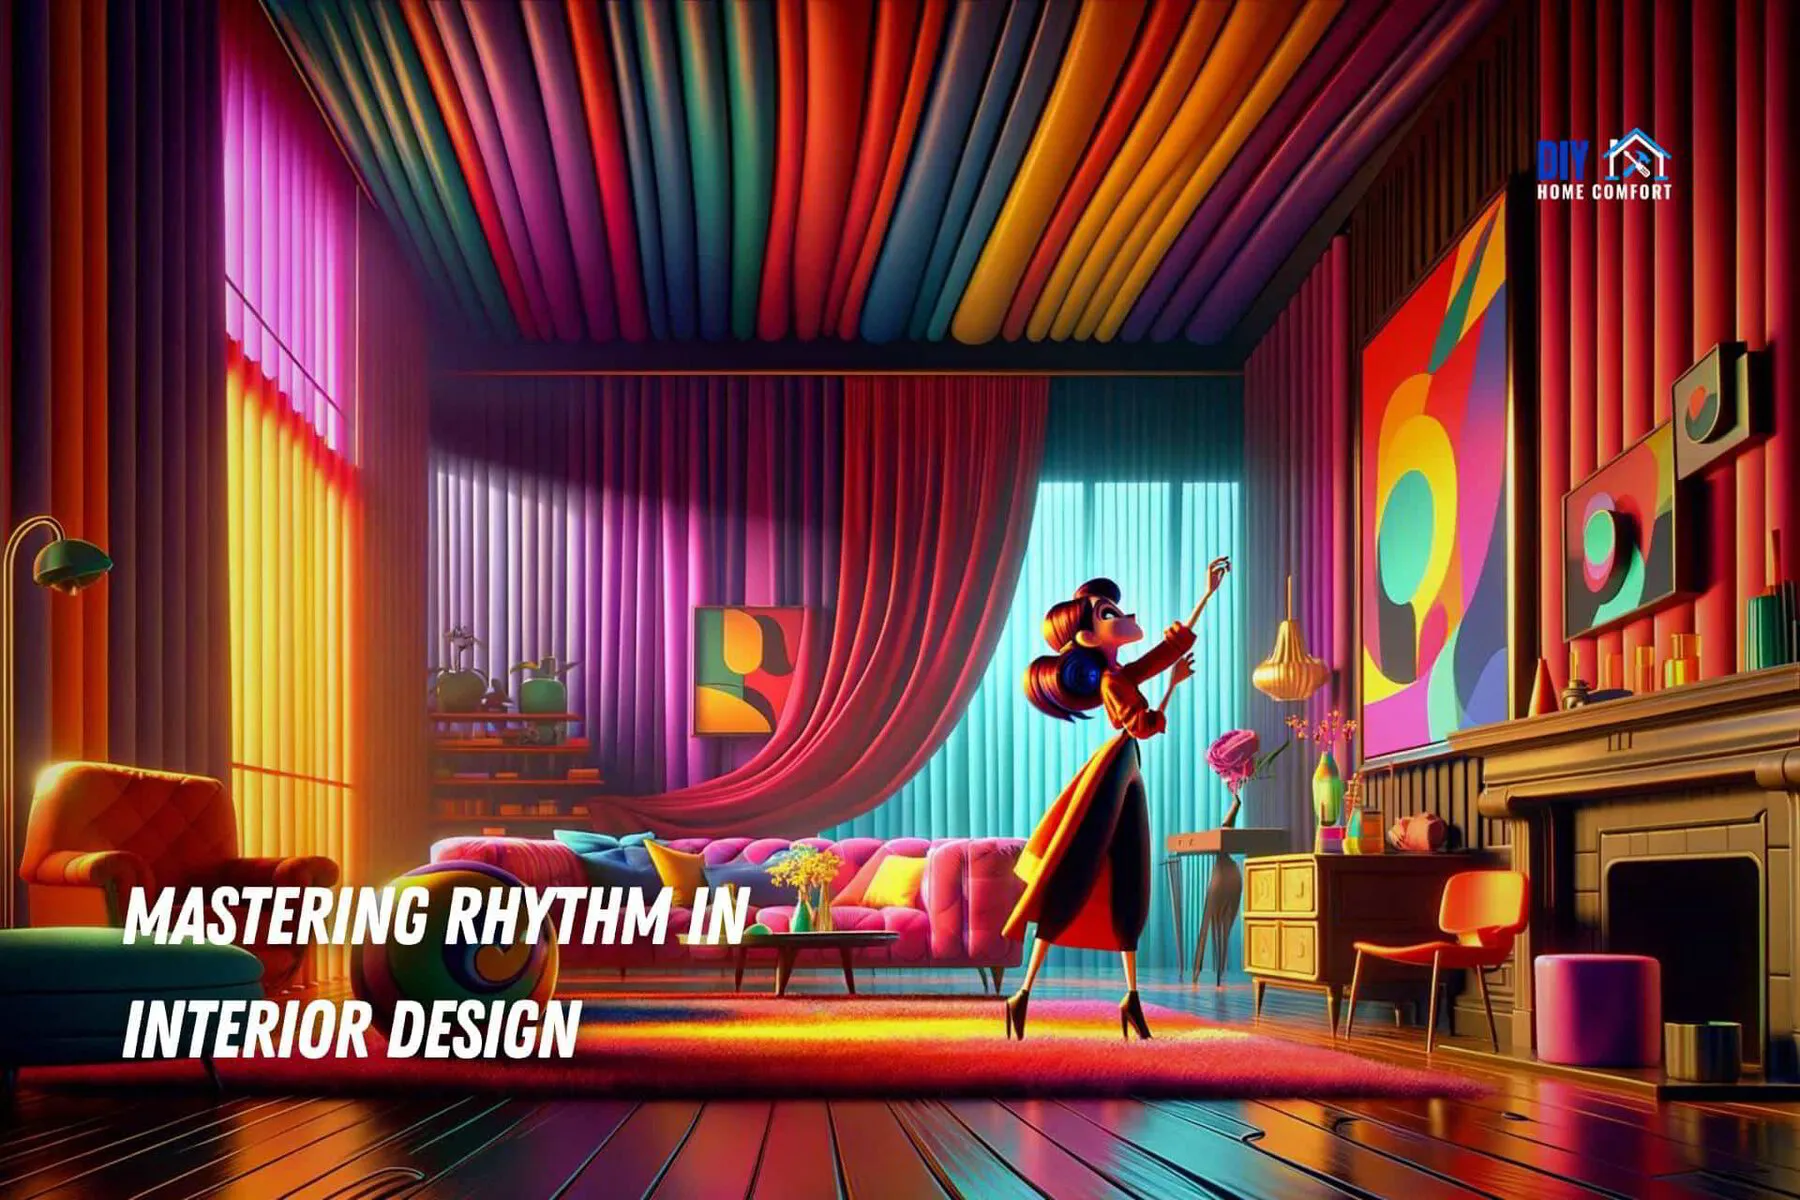 Mastering Rhythm in Interior Design | DIY Home Comfort